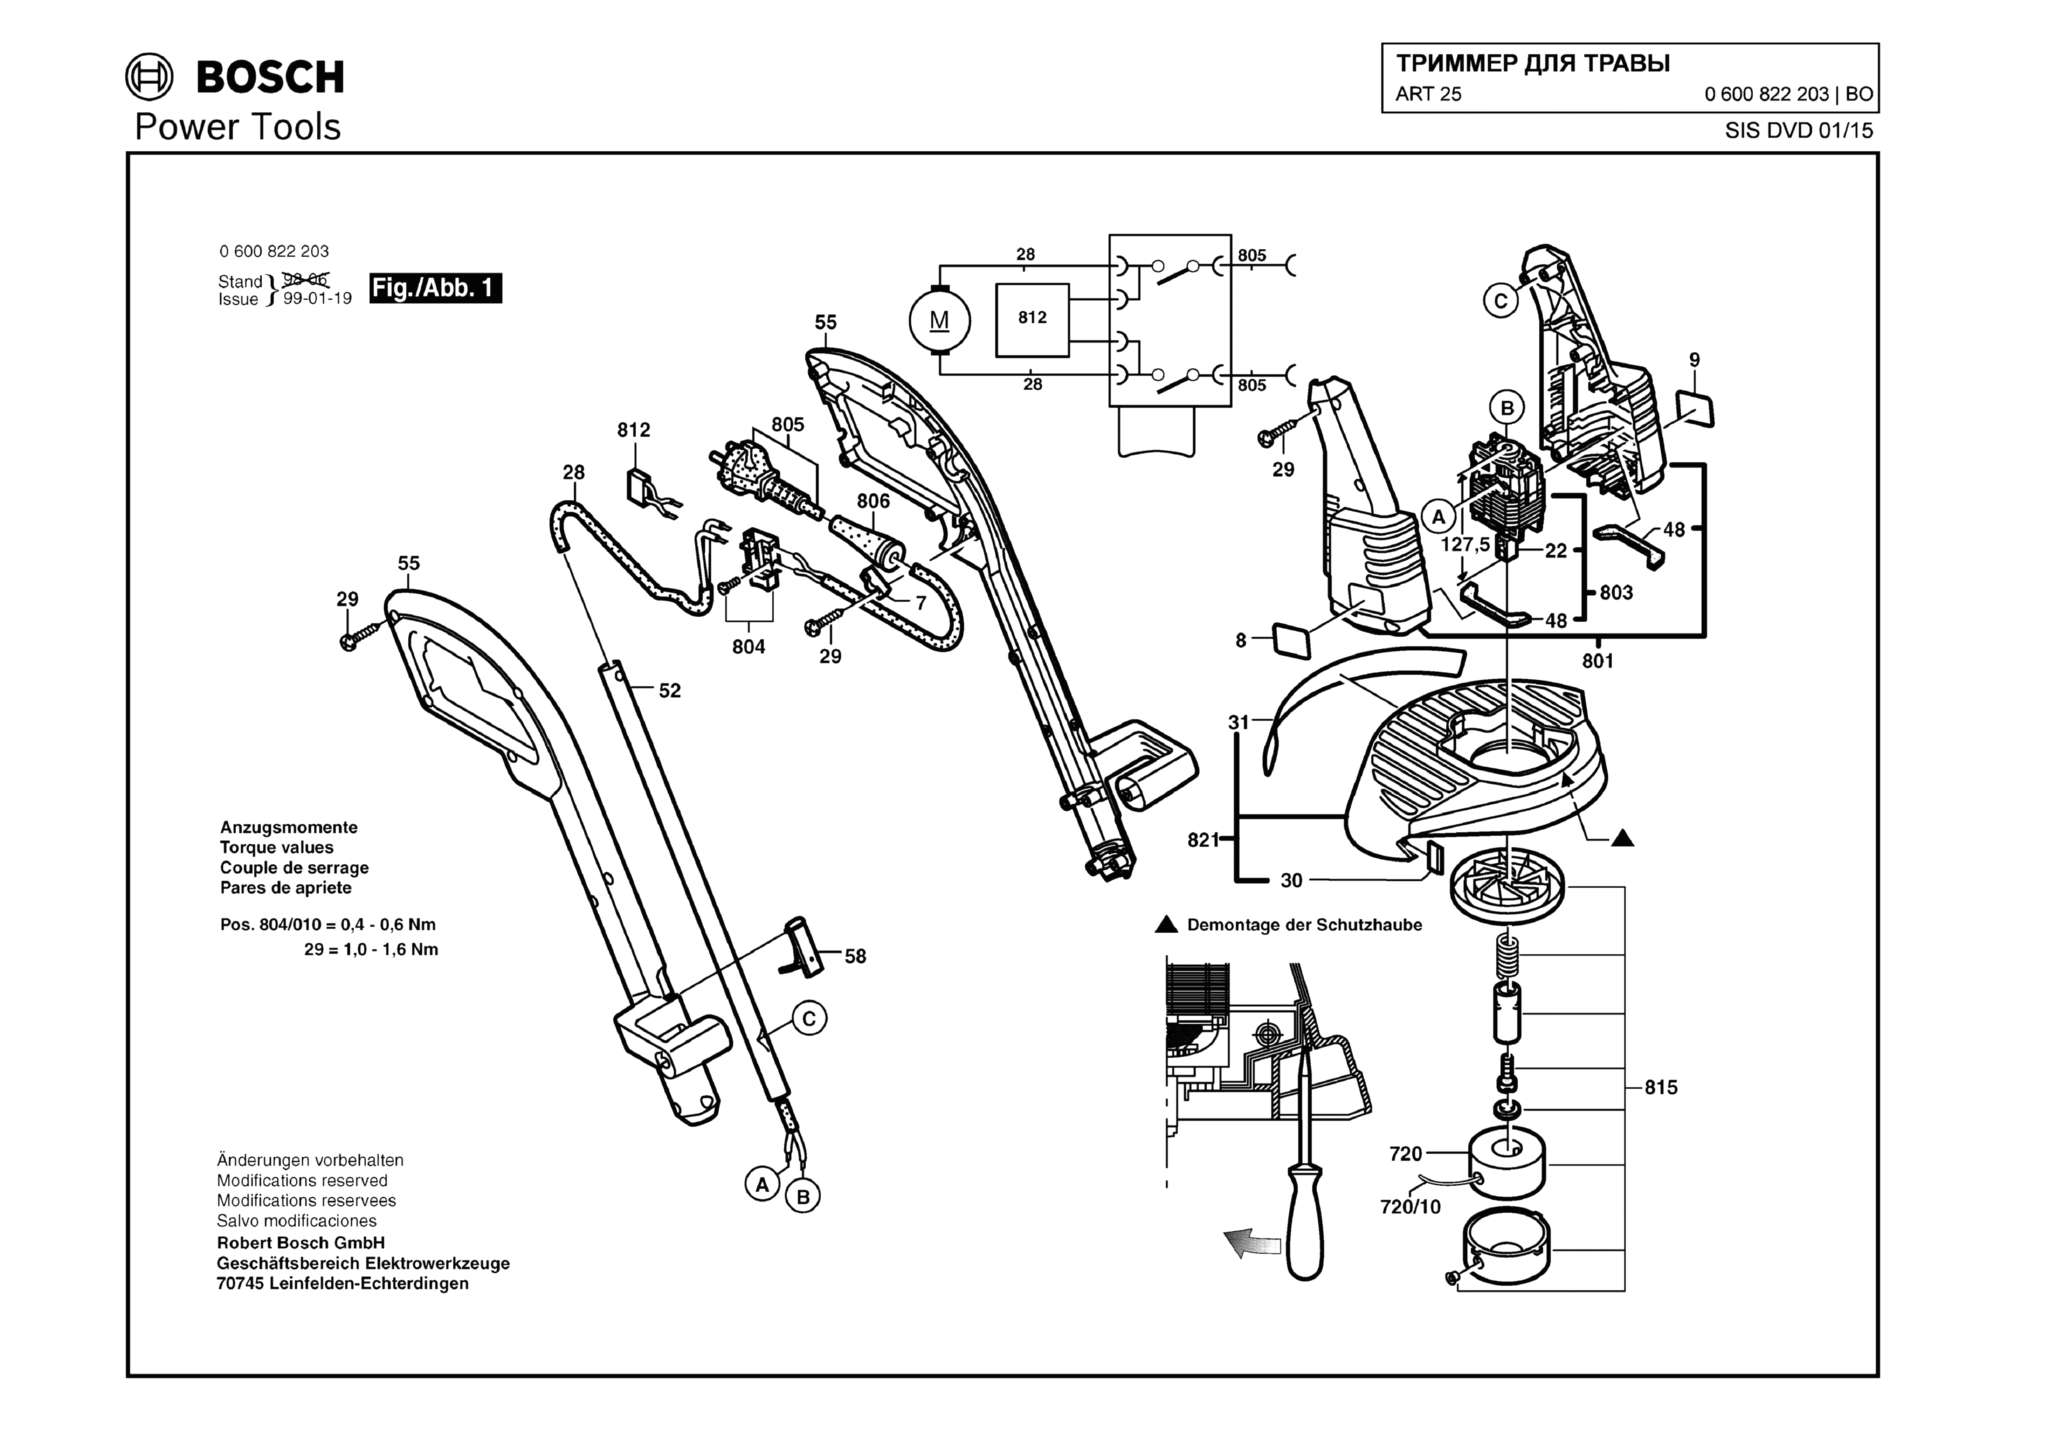 Запчасти, схема и деталировка Bosch ART 25 (ТИП 0600822203)